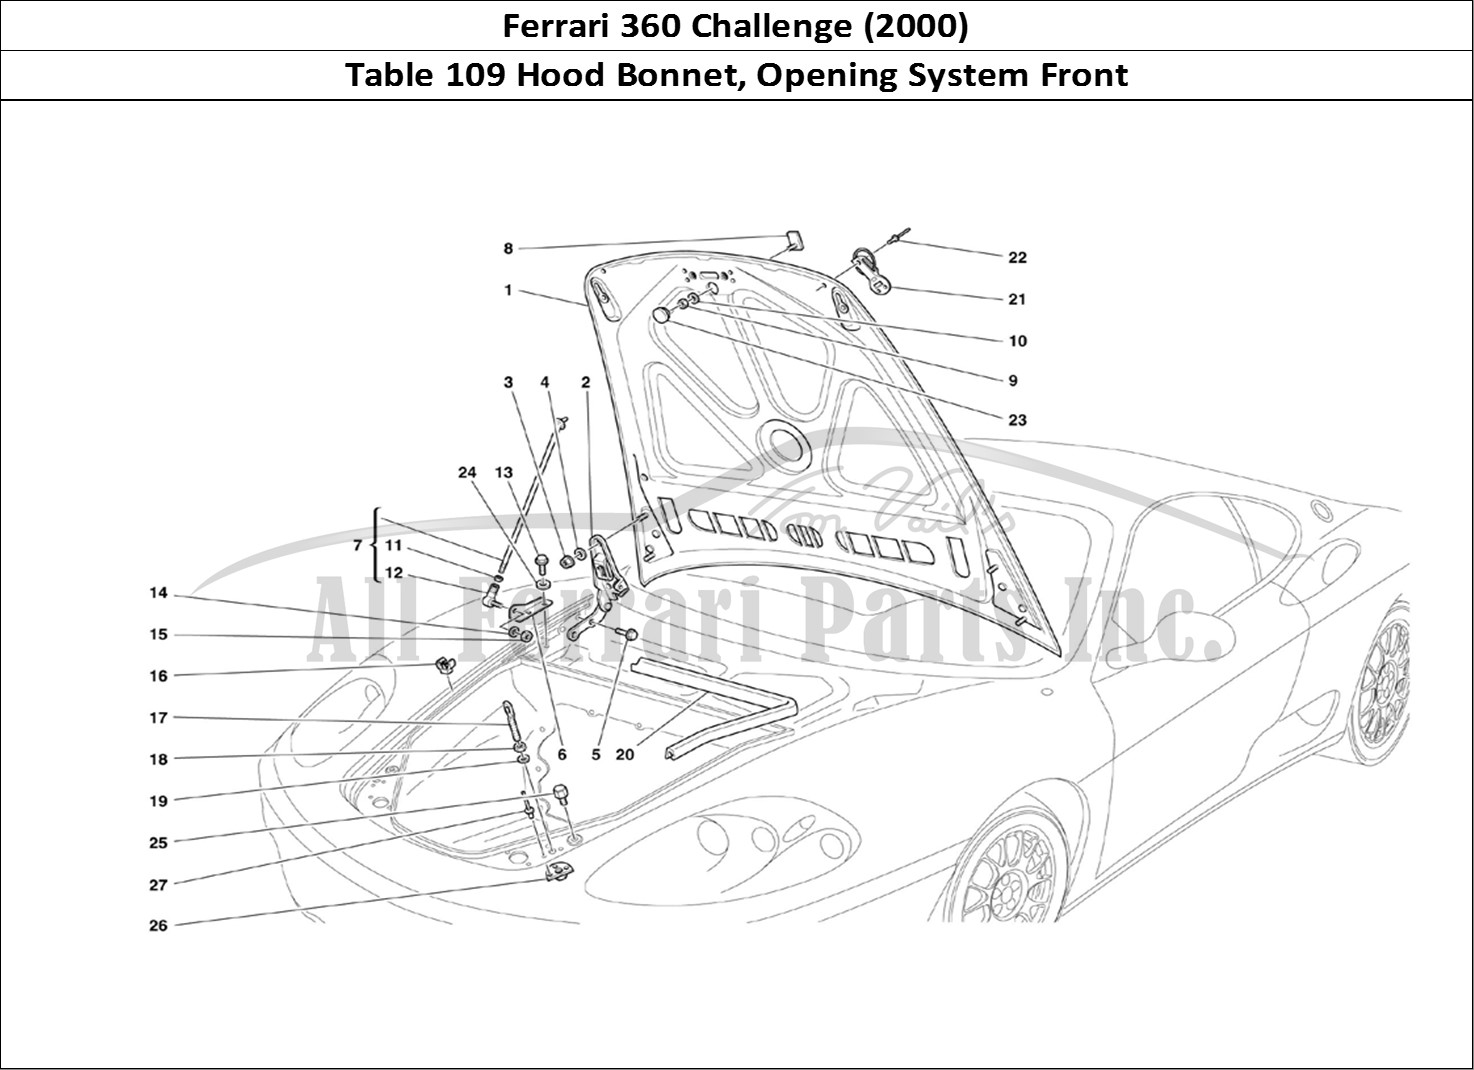 Ferrari Parts Ferrari 360 Challenge (2000) Page 109 Front Hood and Opening De